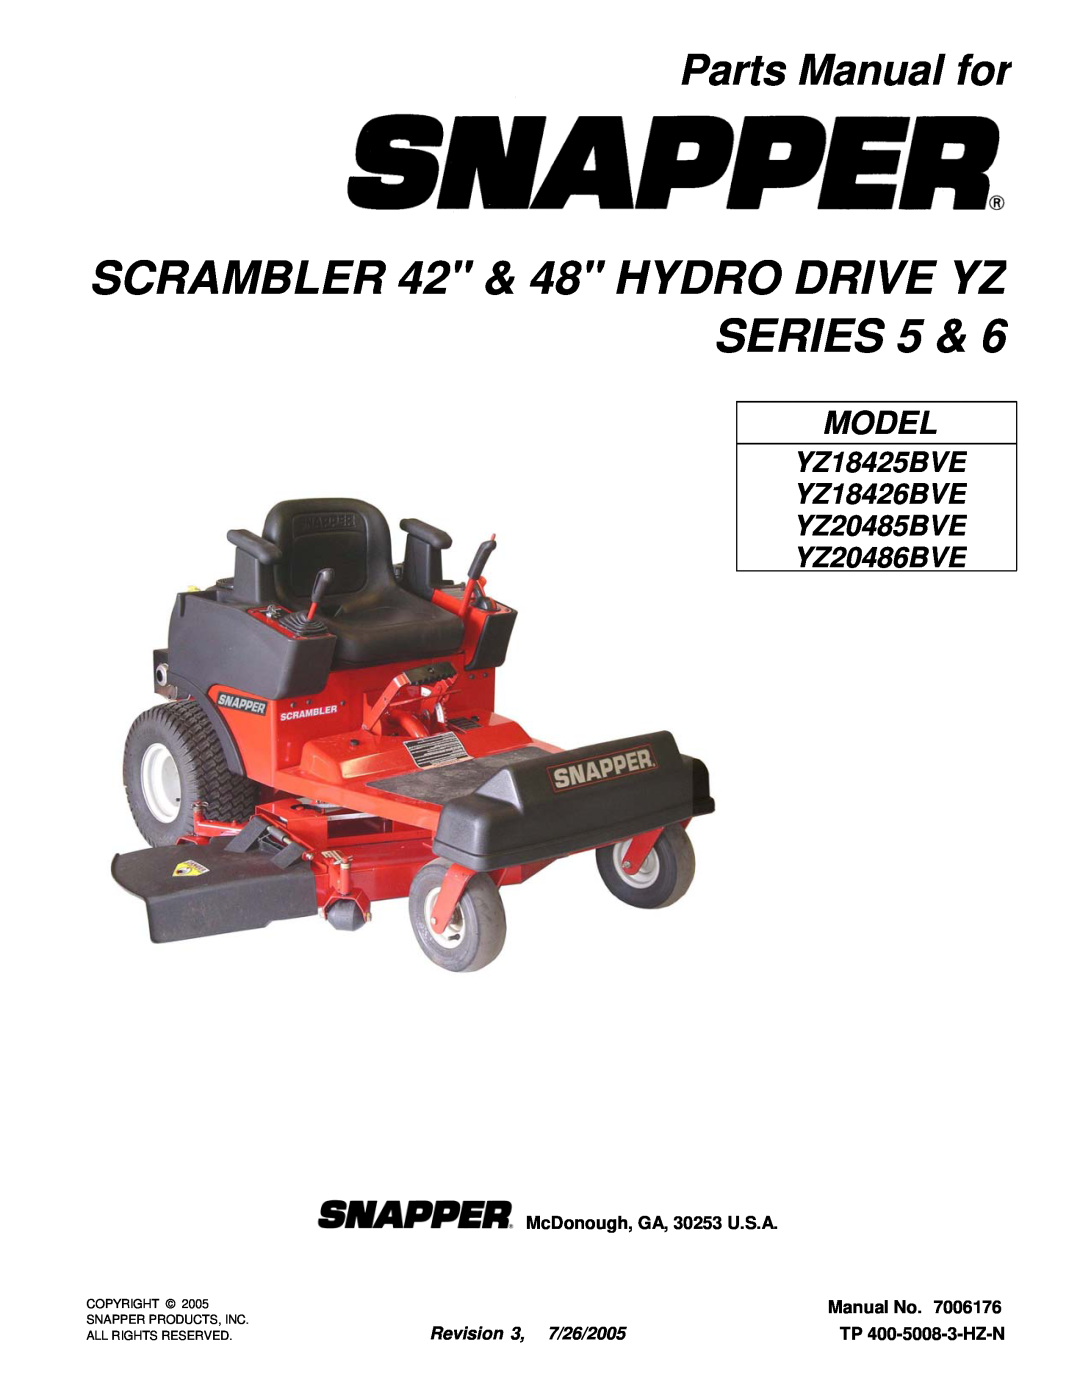 Snapper YZ18426BVE manual Parts Manual for, SCRAMBLER 42 & 48 HYDRO DRIVE YZ SERIES, Model, McDonough, GA, 30253 U.S.A 